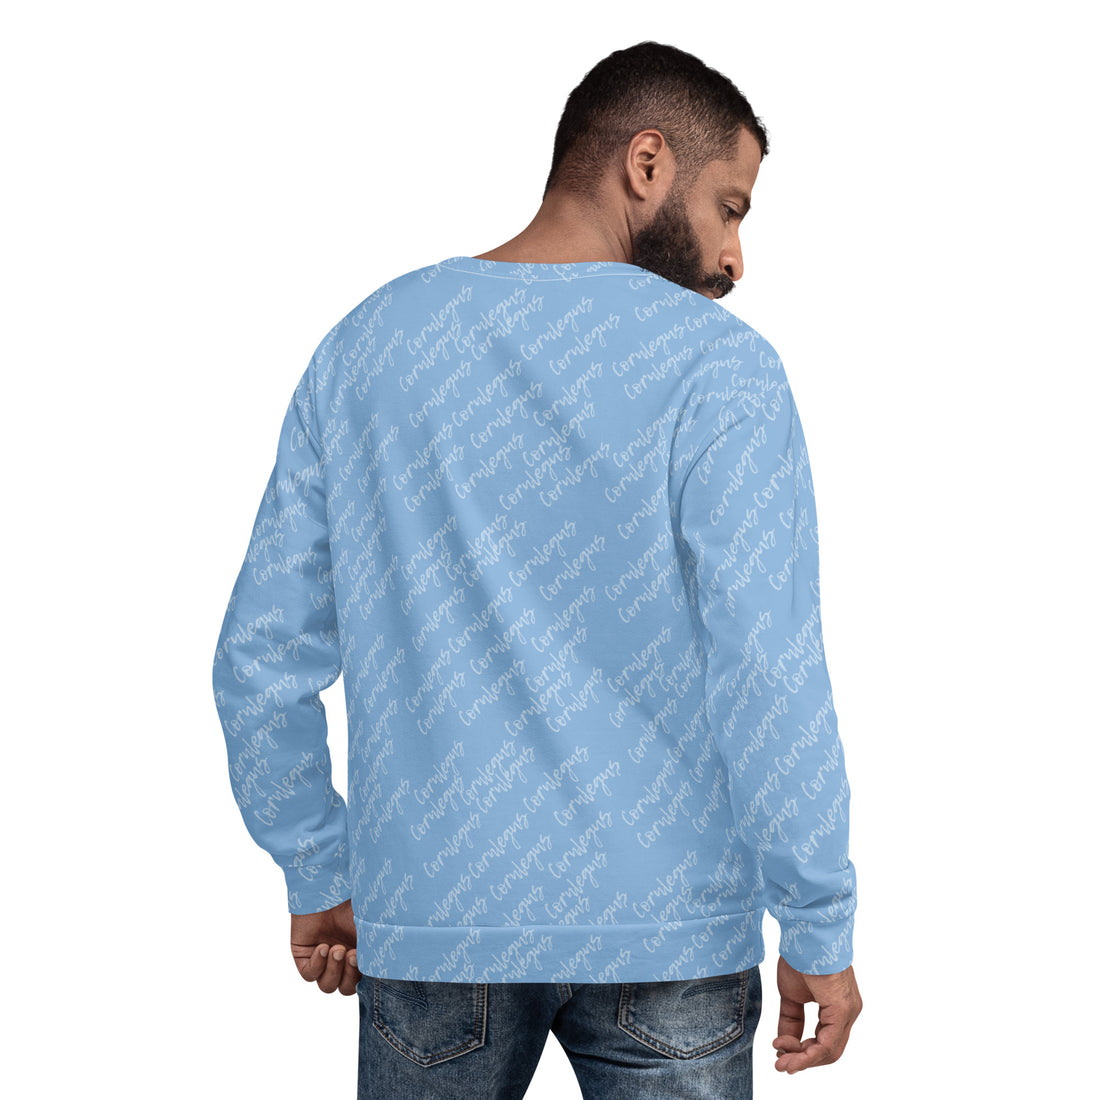 Bluelegus Unisex Sweatshirt